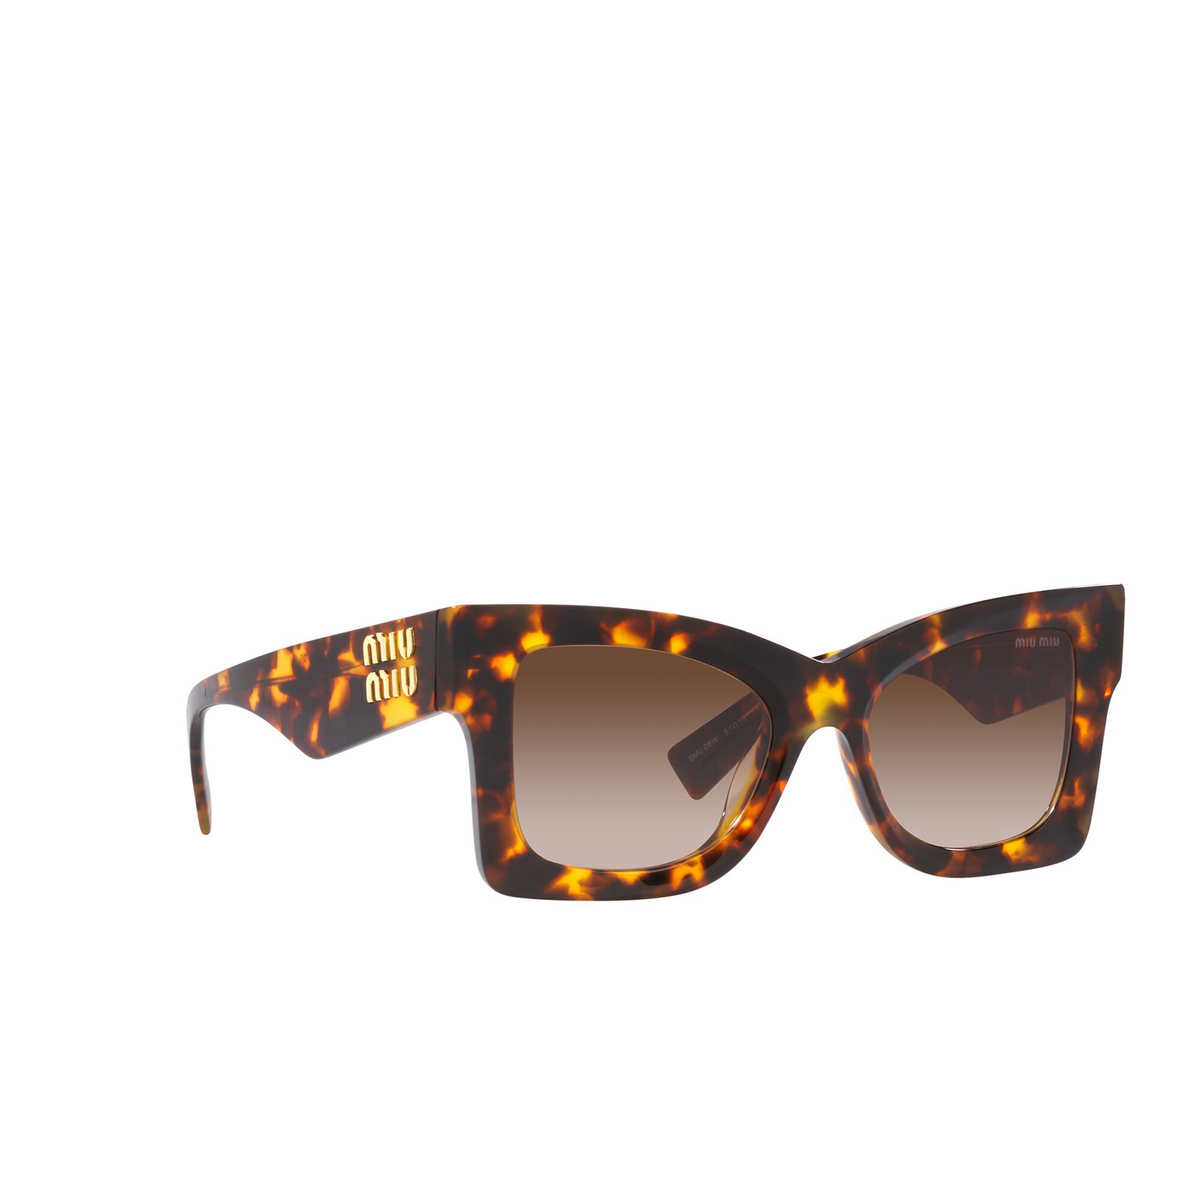 Miu Miu® Butterfly Sunglasses: MU 08WS color Honey Havana VAU6S1 - three-quarters view.